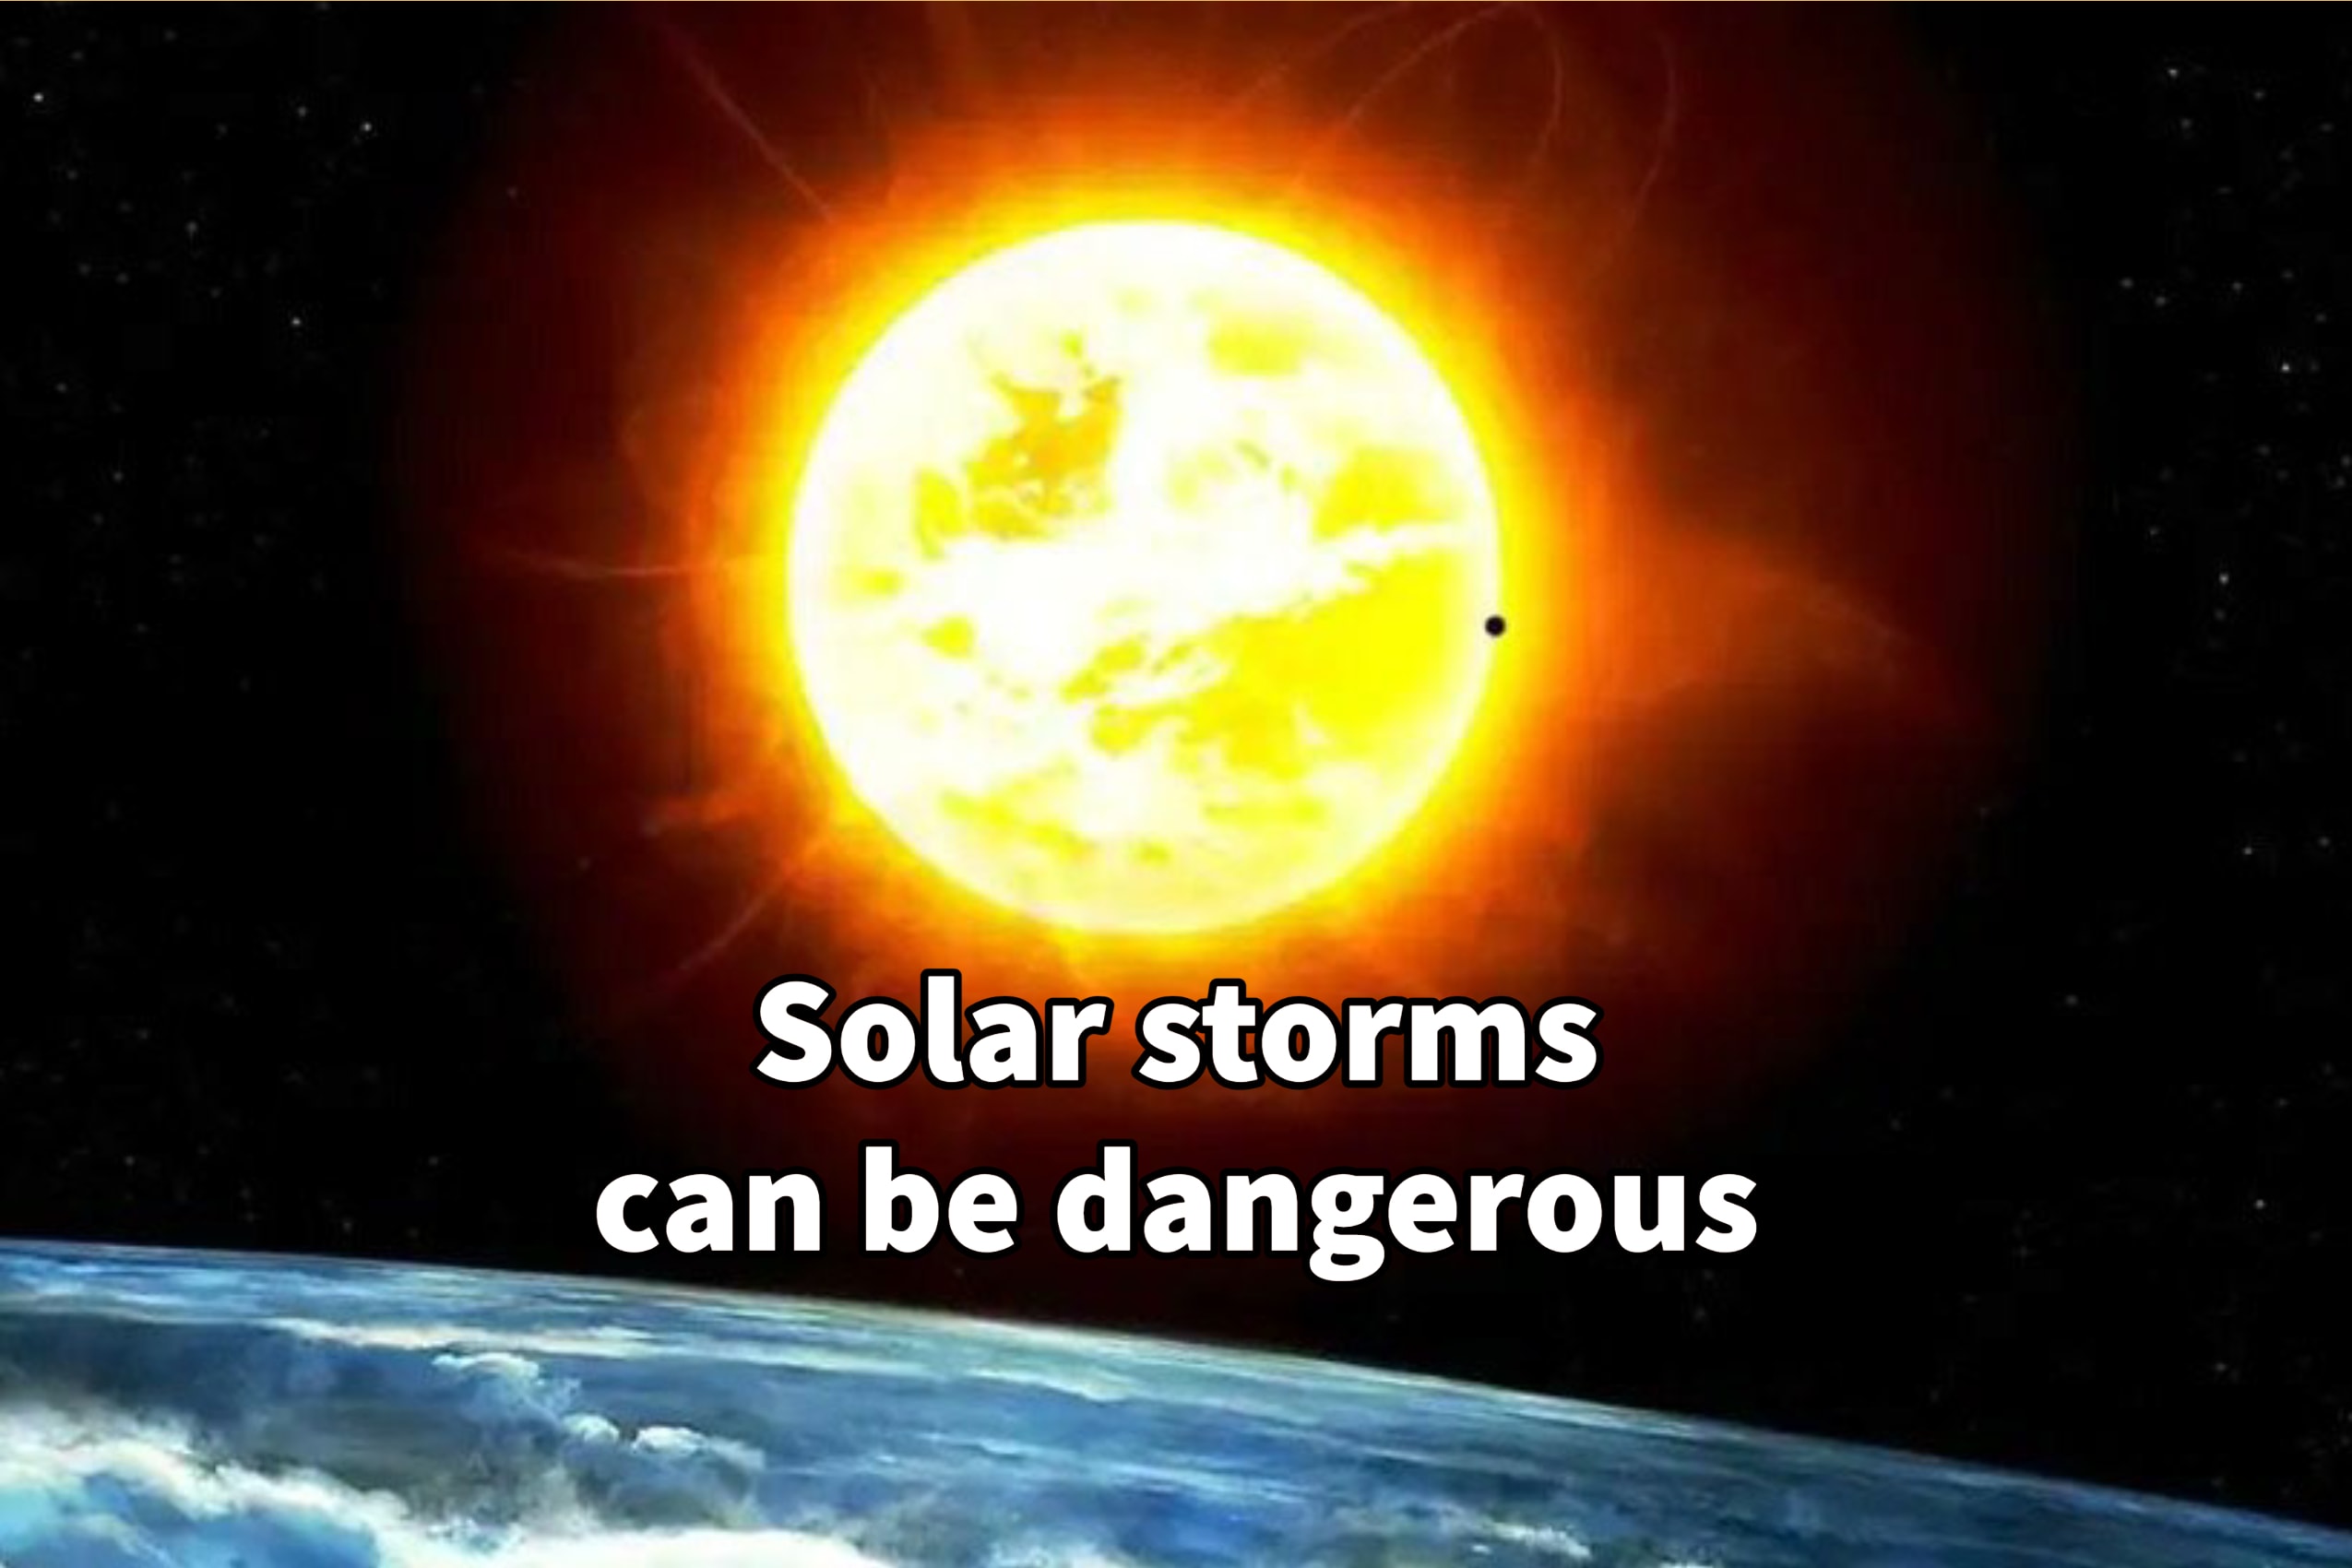 Sun blast kills batch of Starlink satellites, will burn up reentering